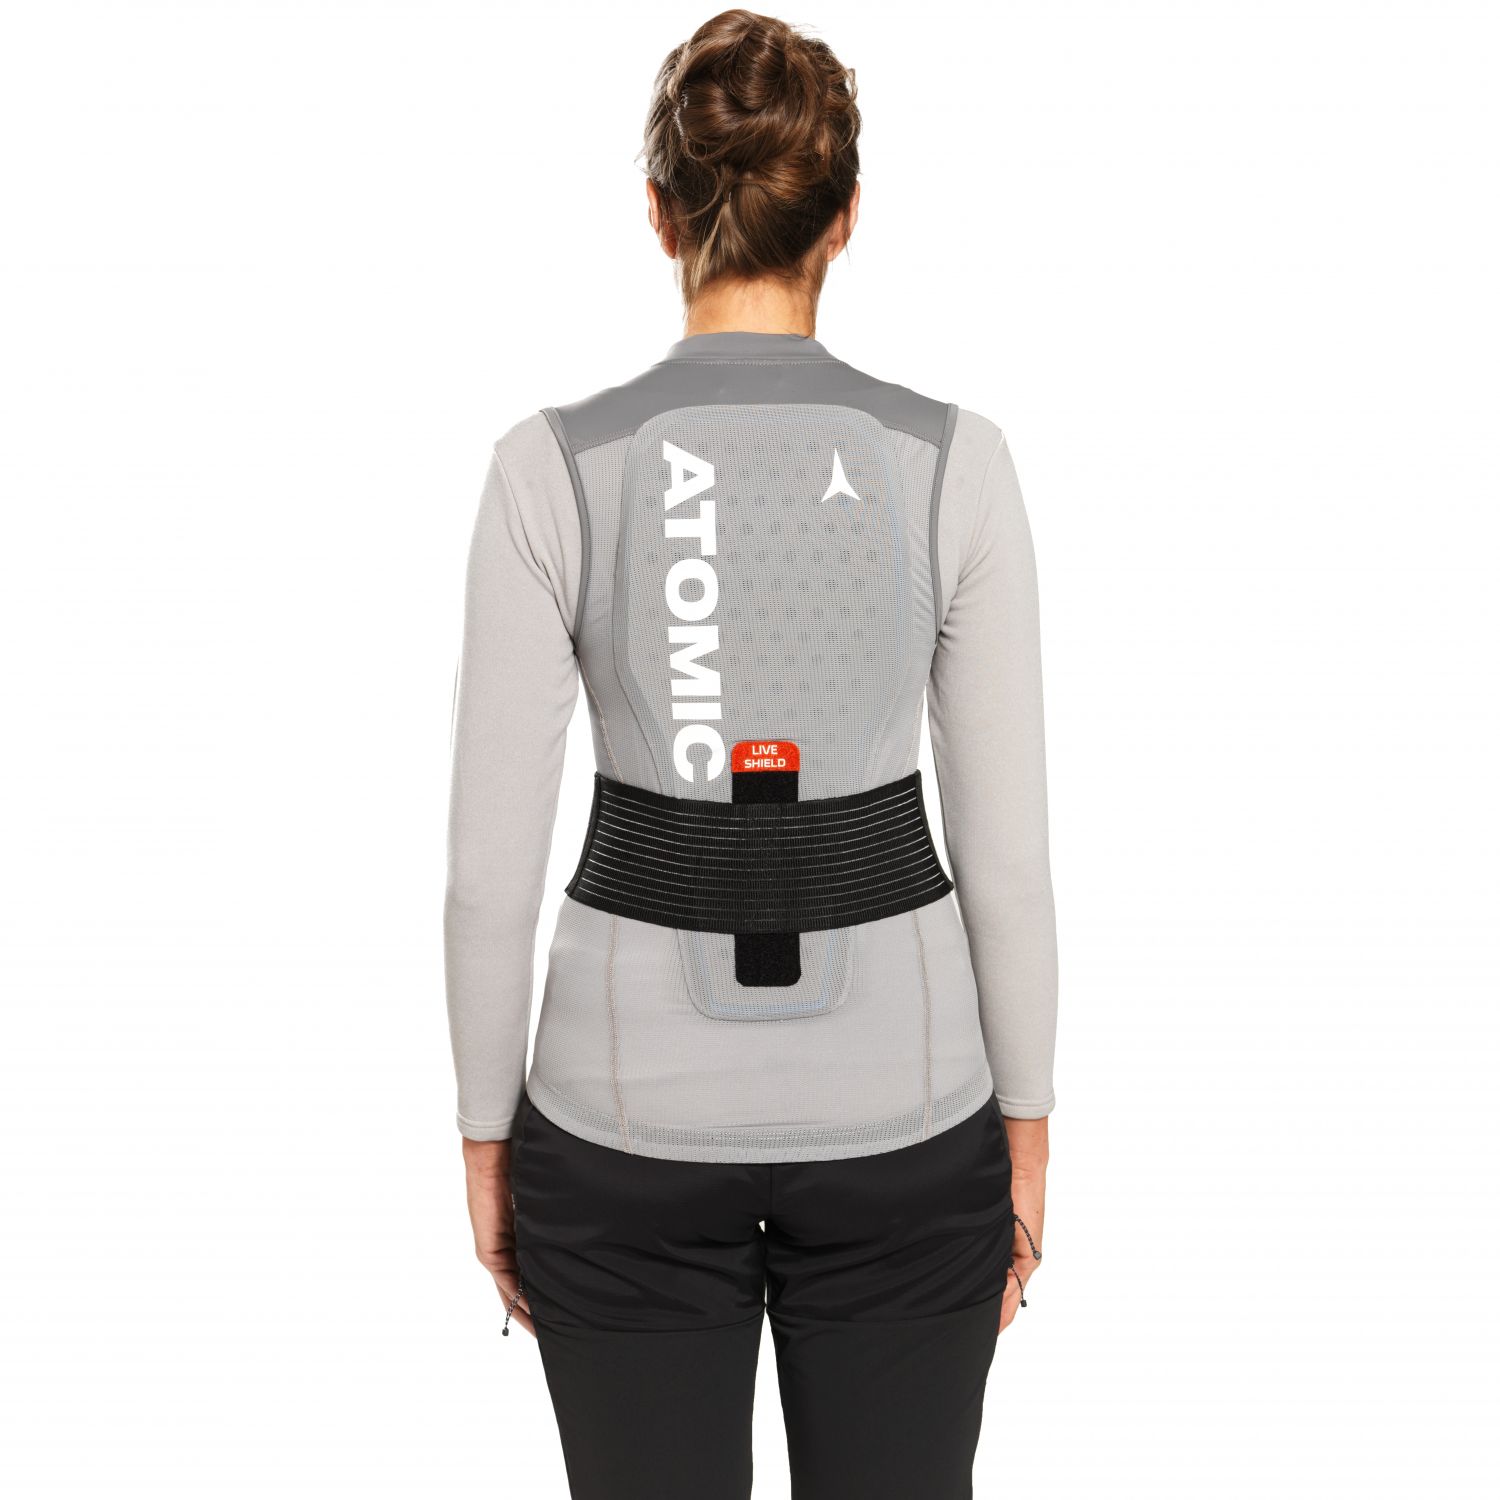 Atomic Live Shield Vest, back protector, women, grey